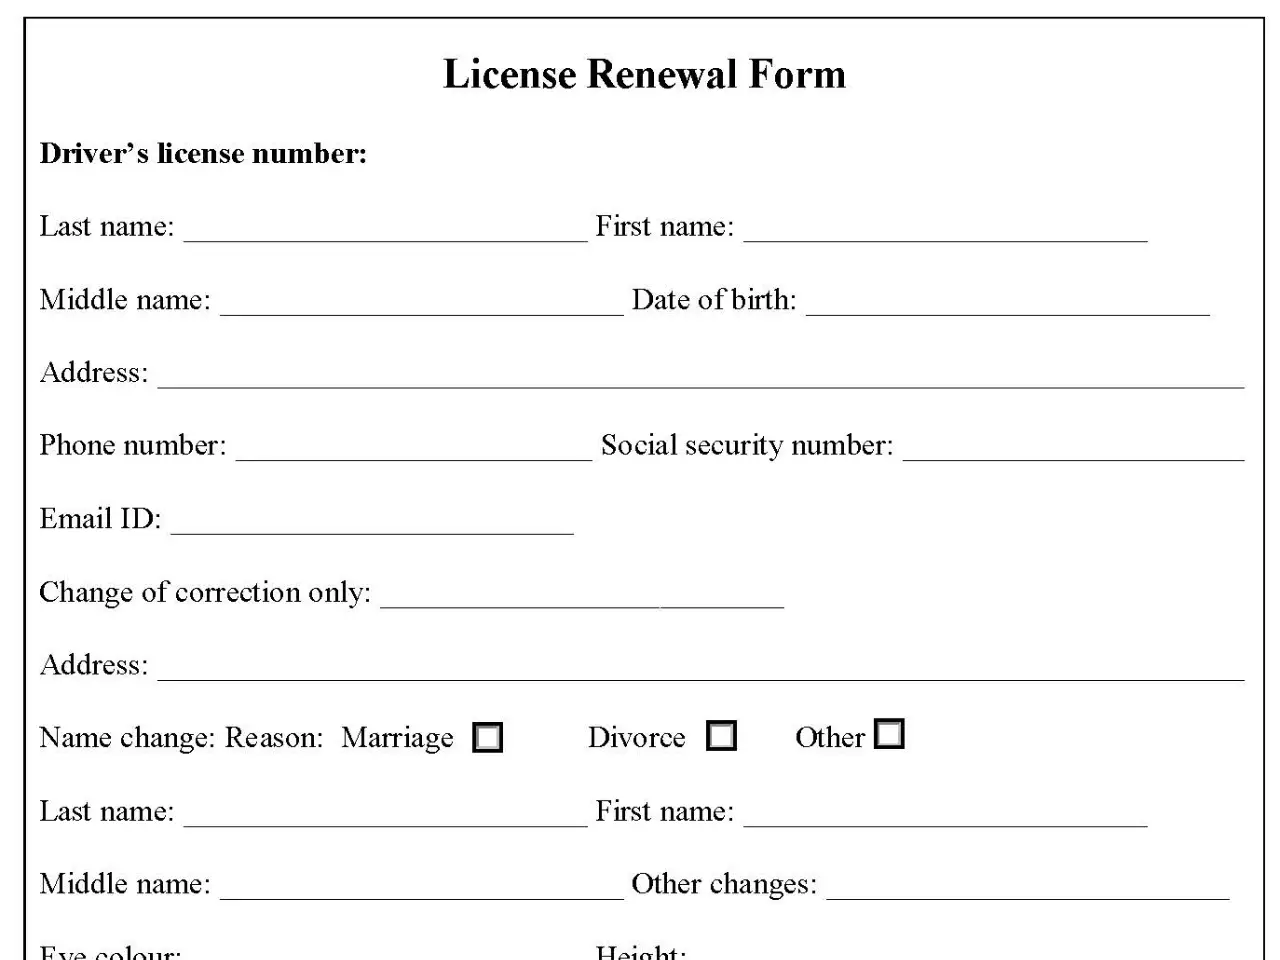 License Renewal Form